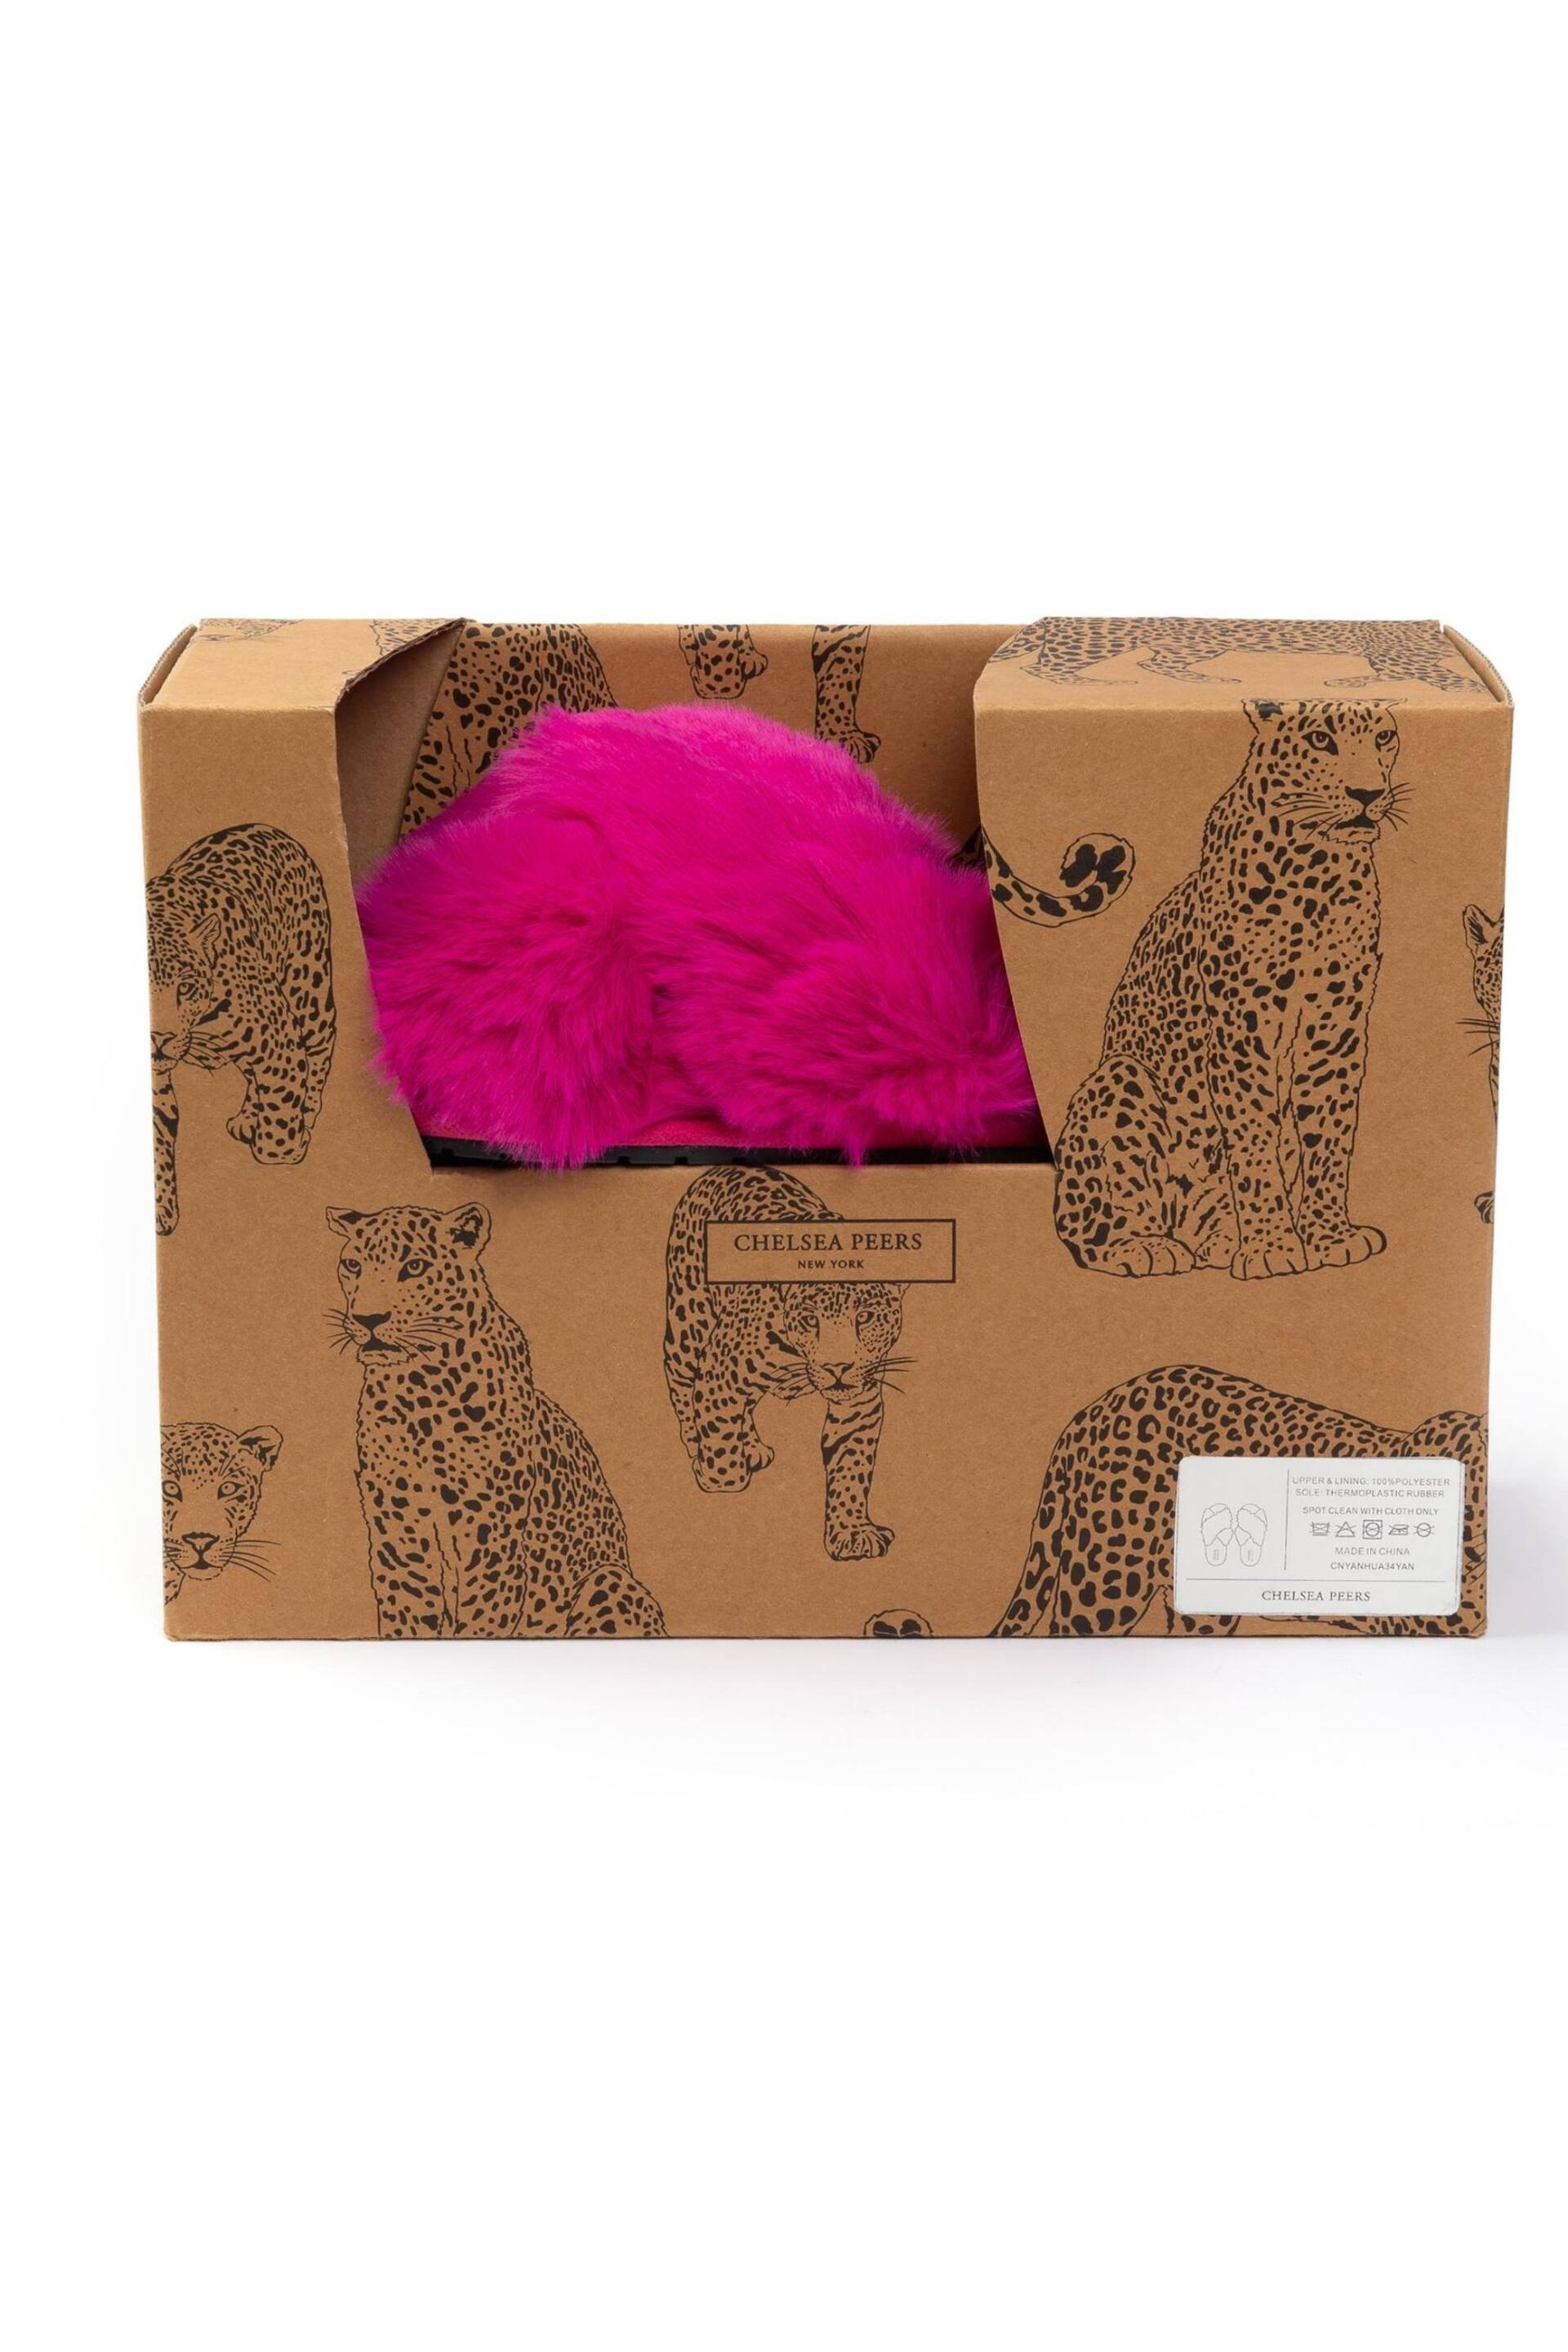 Chelsea Peers Pink Regular Fit Fluffy Cross Strap Slider Slippers - Image 4 of 5